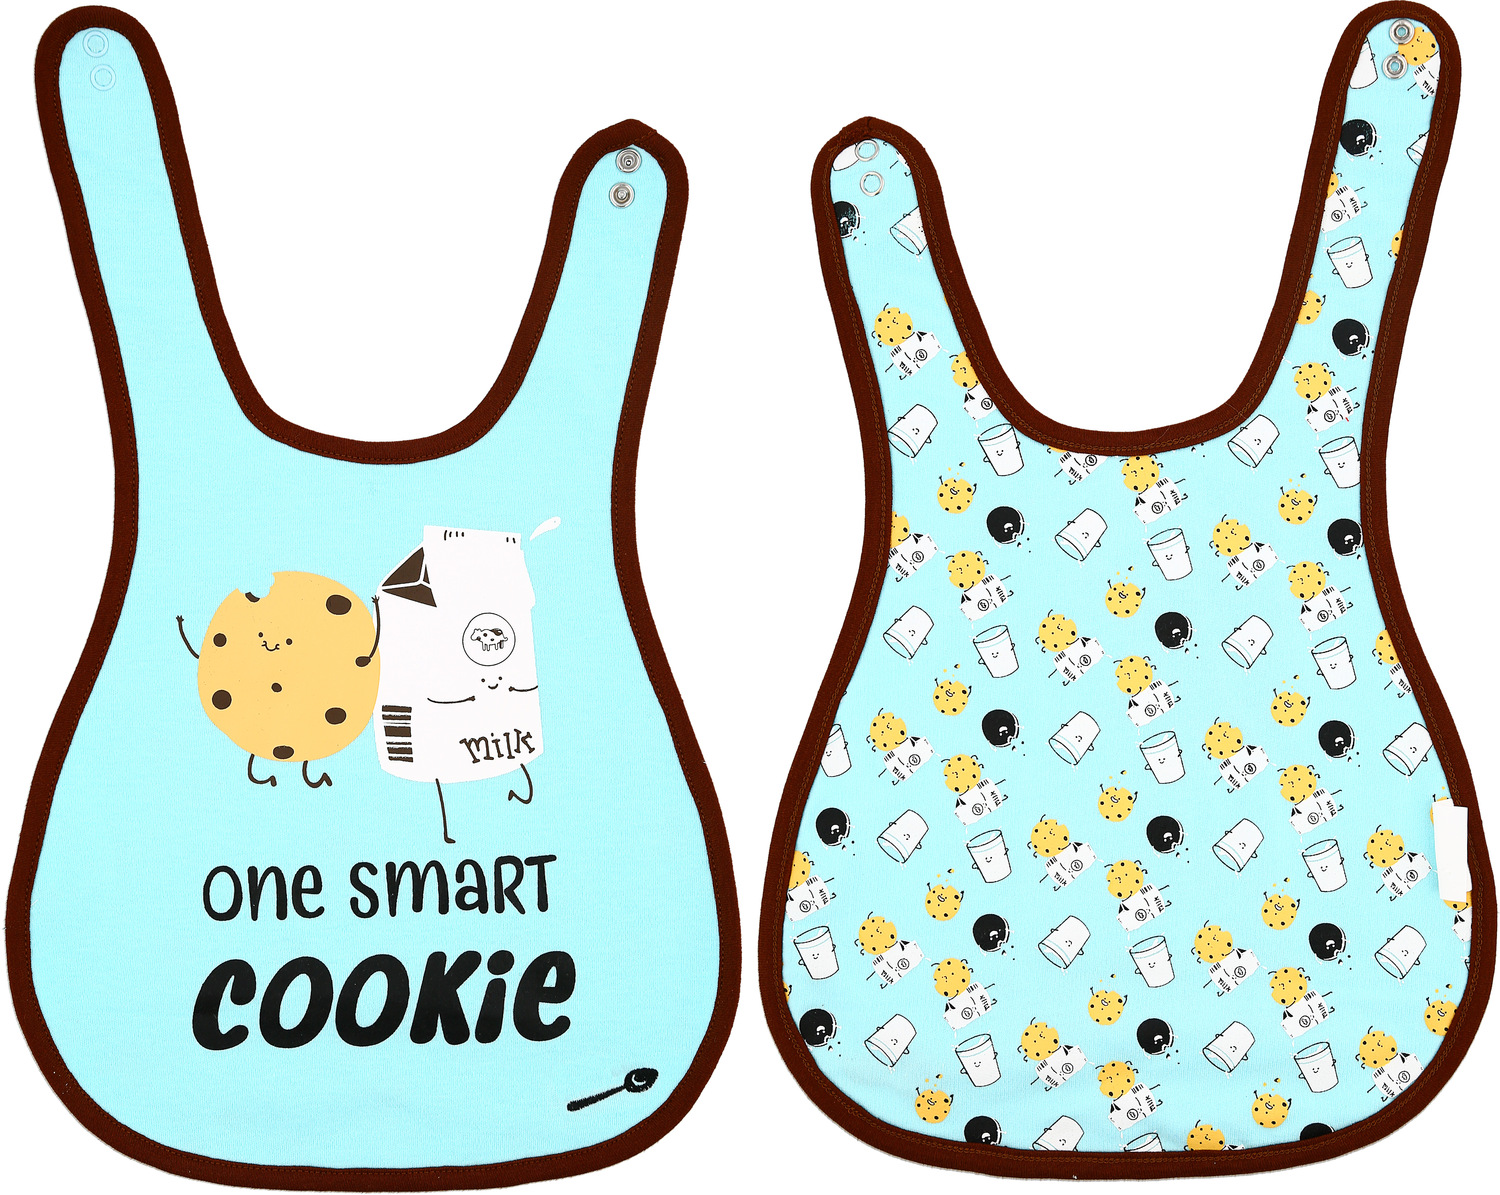 Cookies and Milk by Late Night Snacks - Cookies and Milk - Light Blue Reversible Bib
(6M - 3 Years)